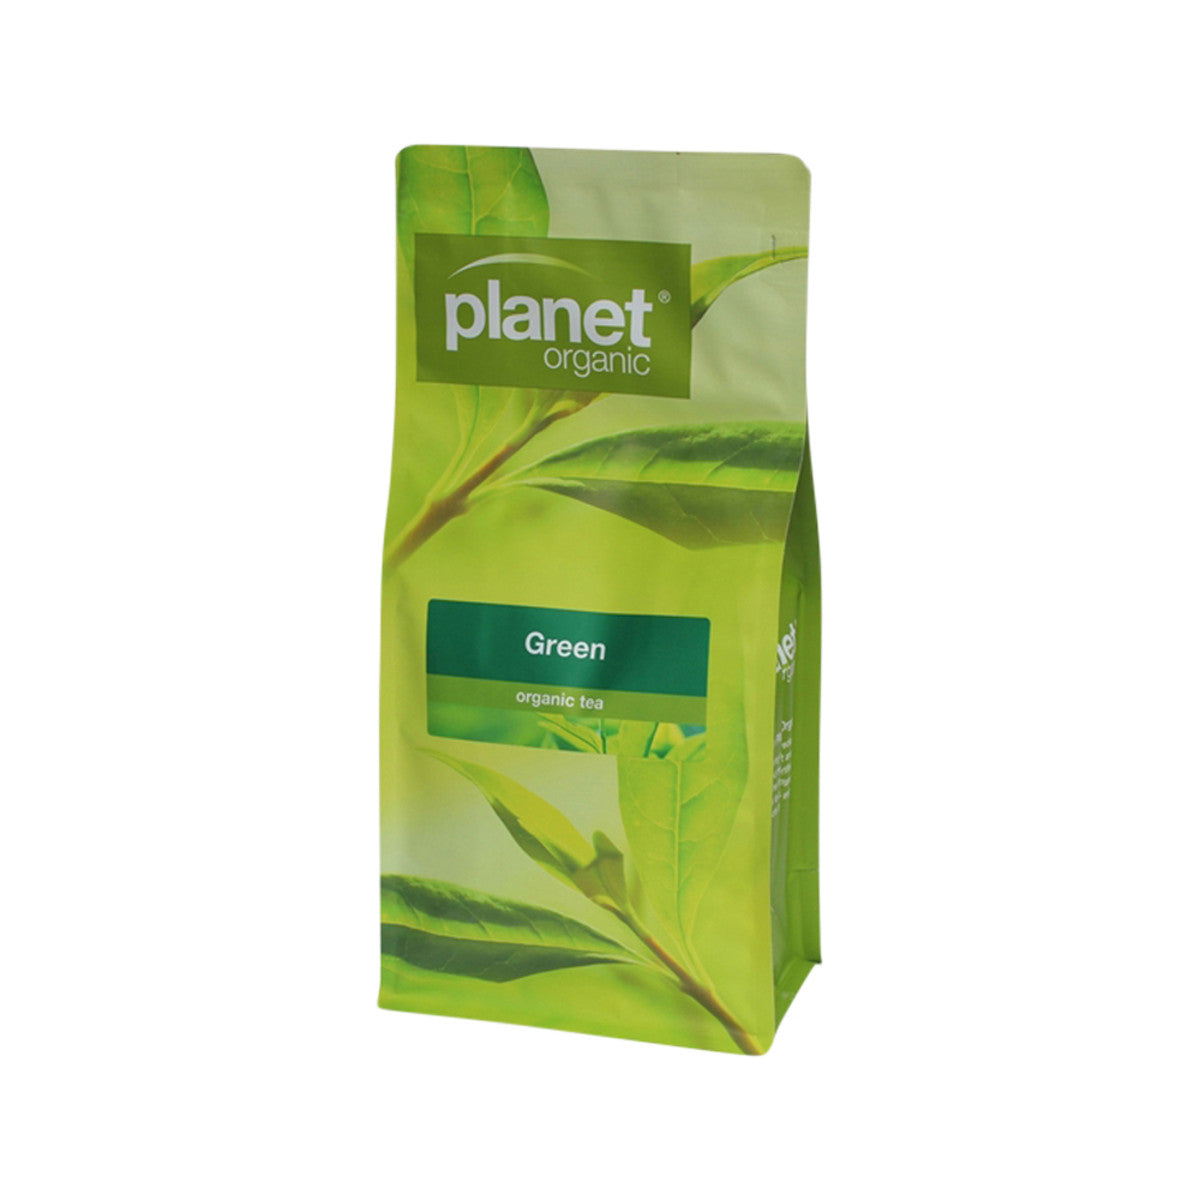 Planet Organic - Green Tea Loose Leaf Tea